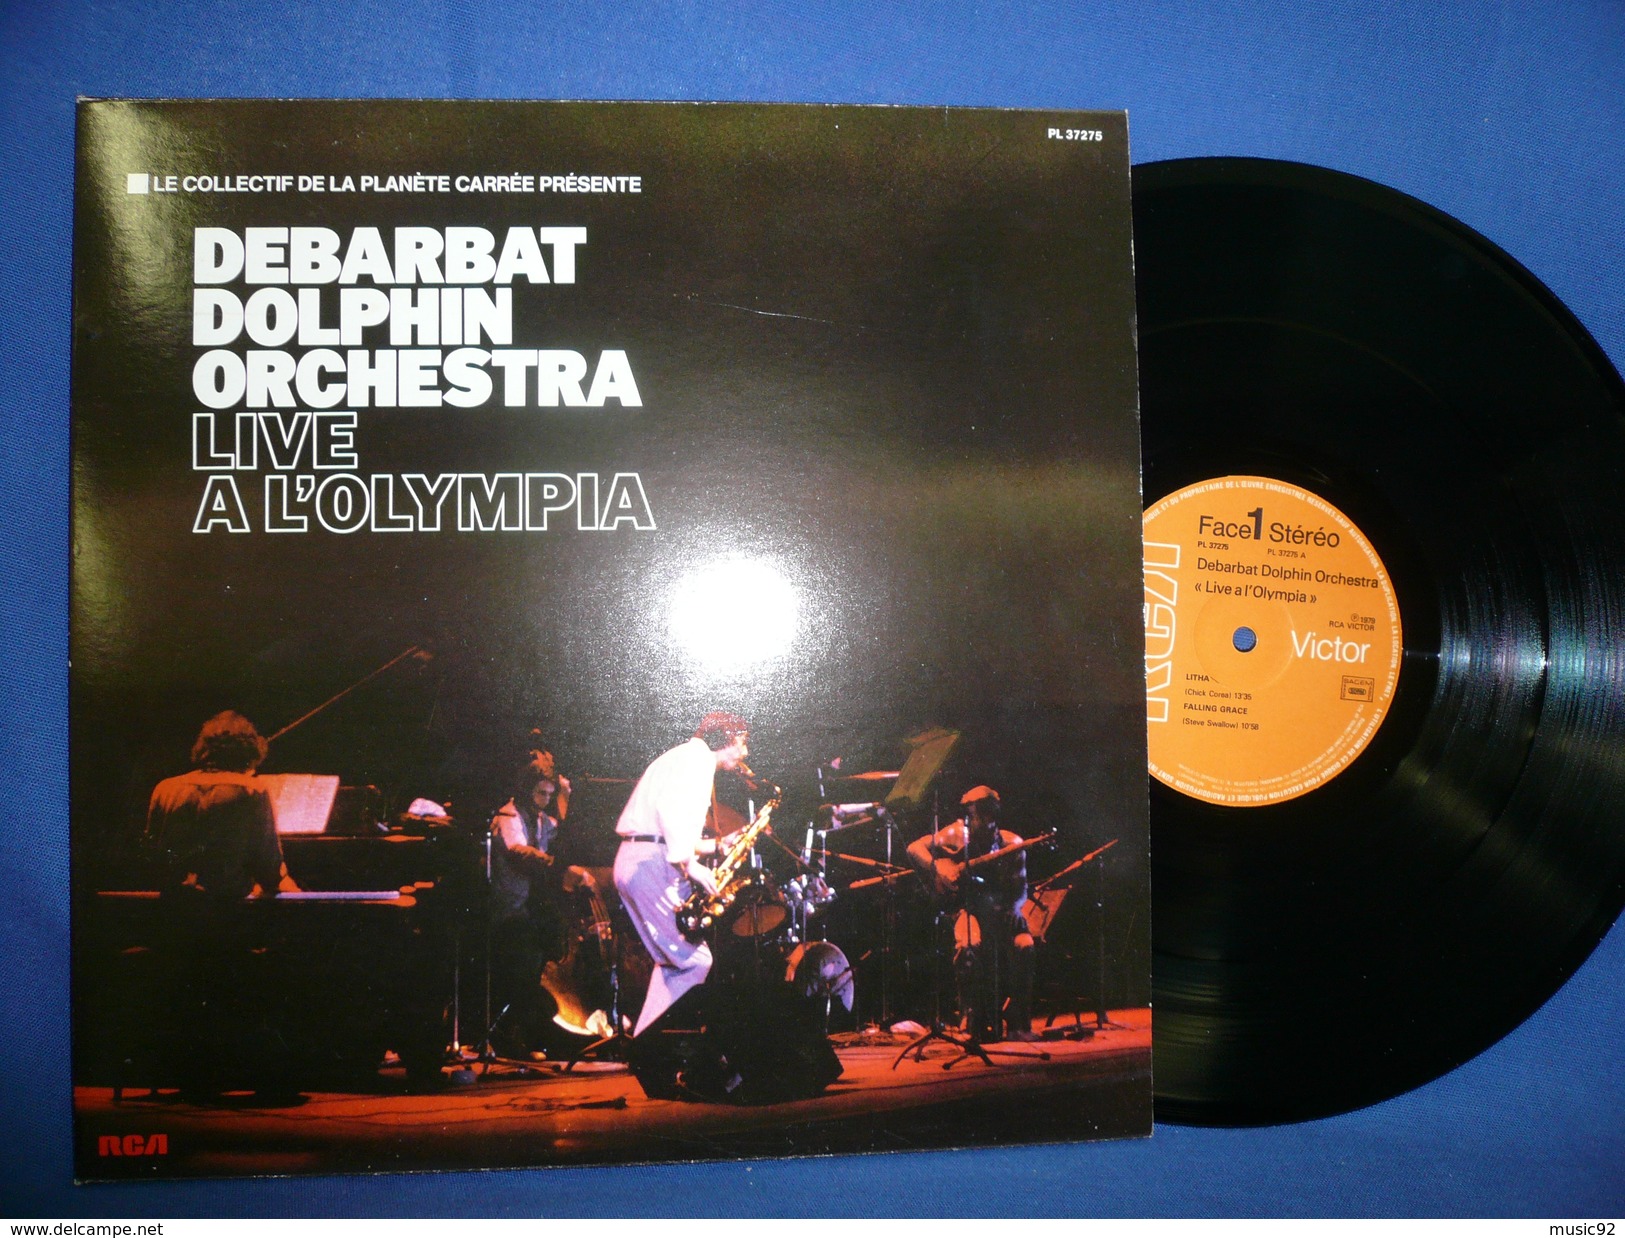 Debarbat Dolphin Orchestra"33t"Live A L'Olympia" - Jazz